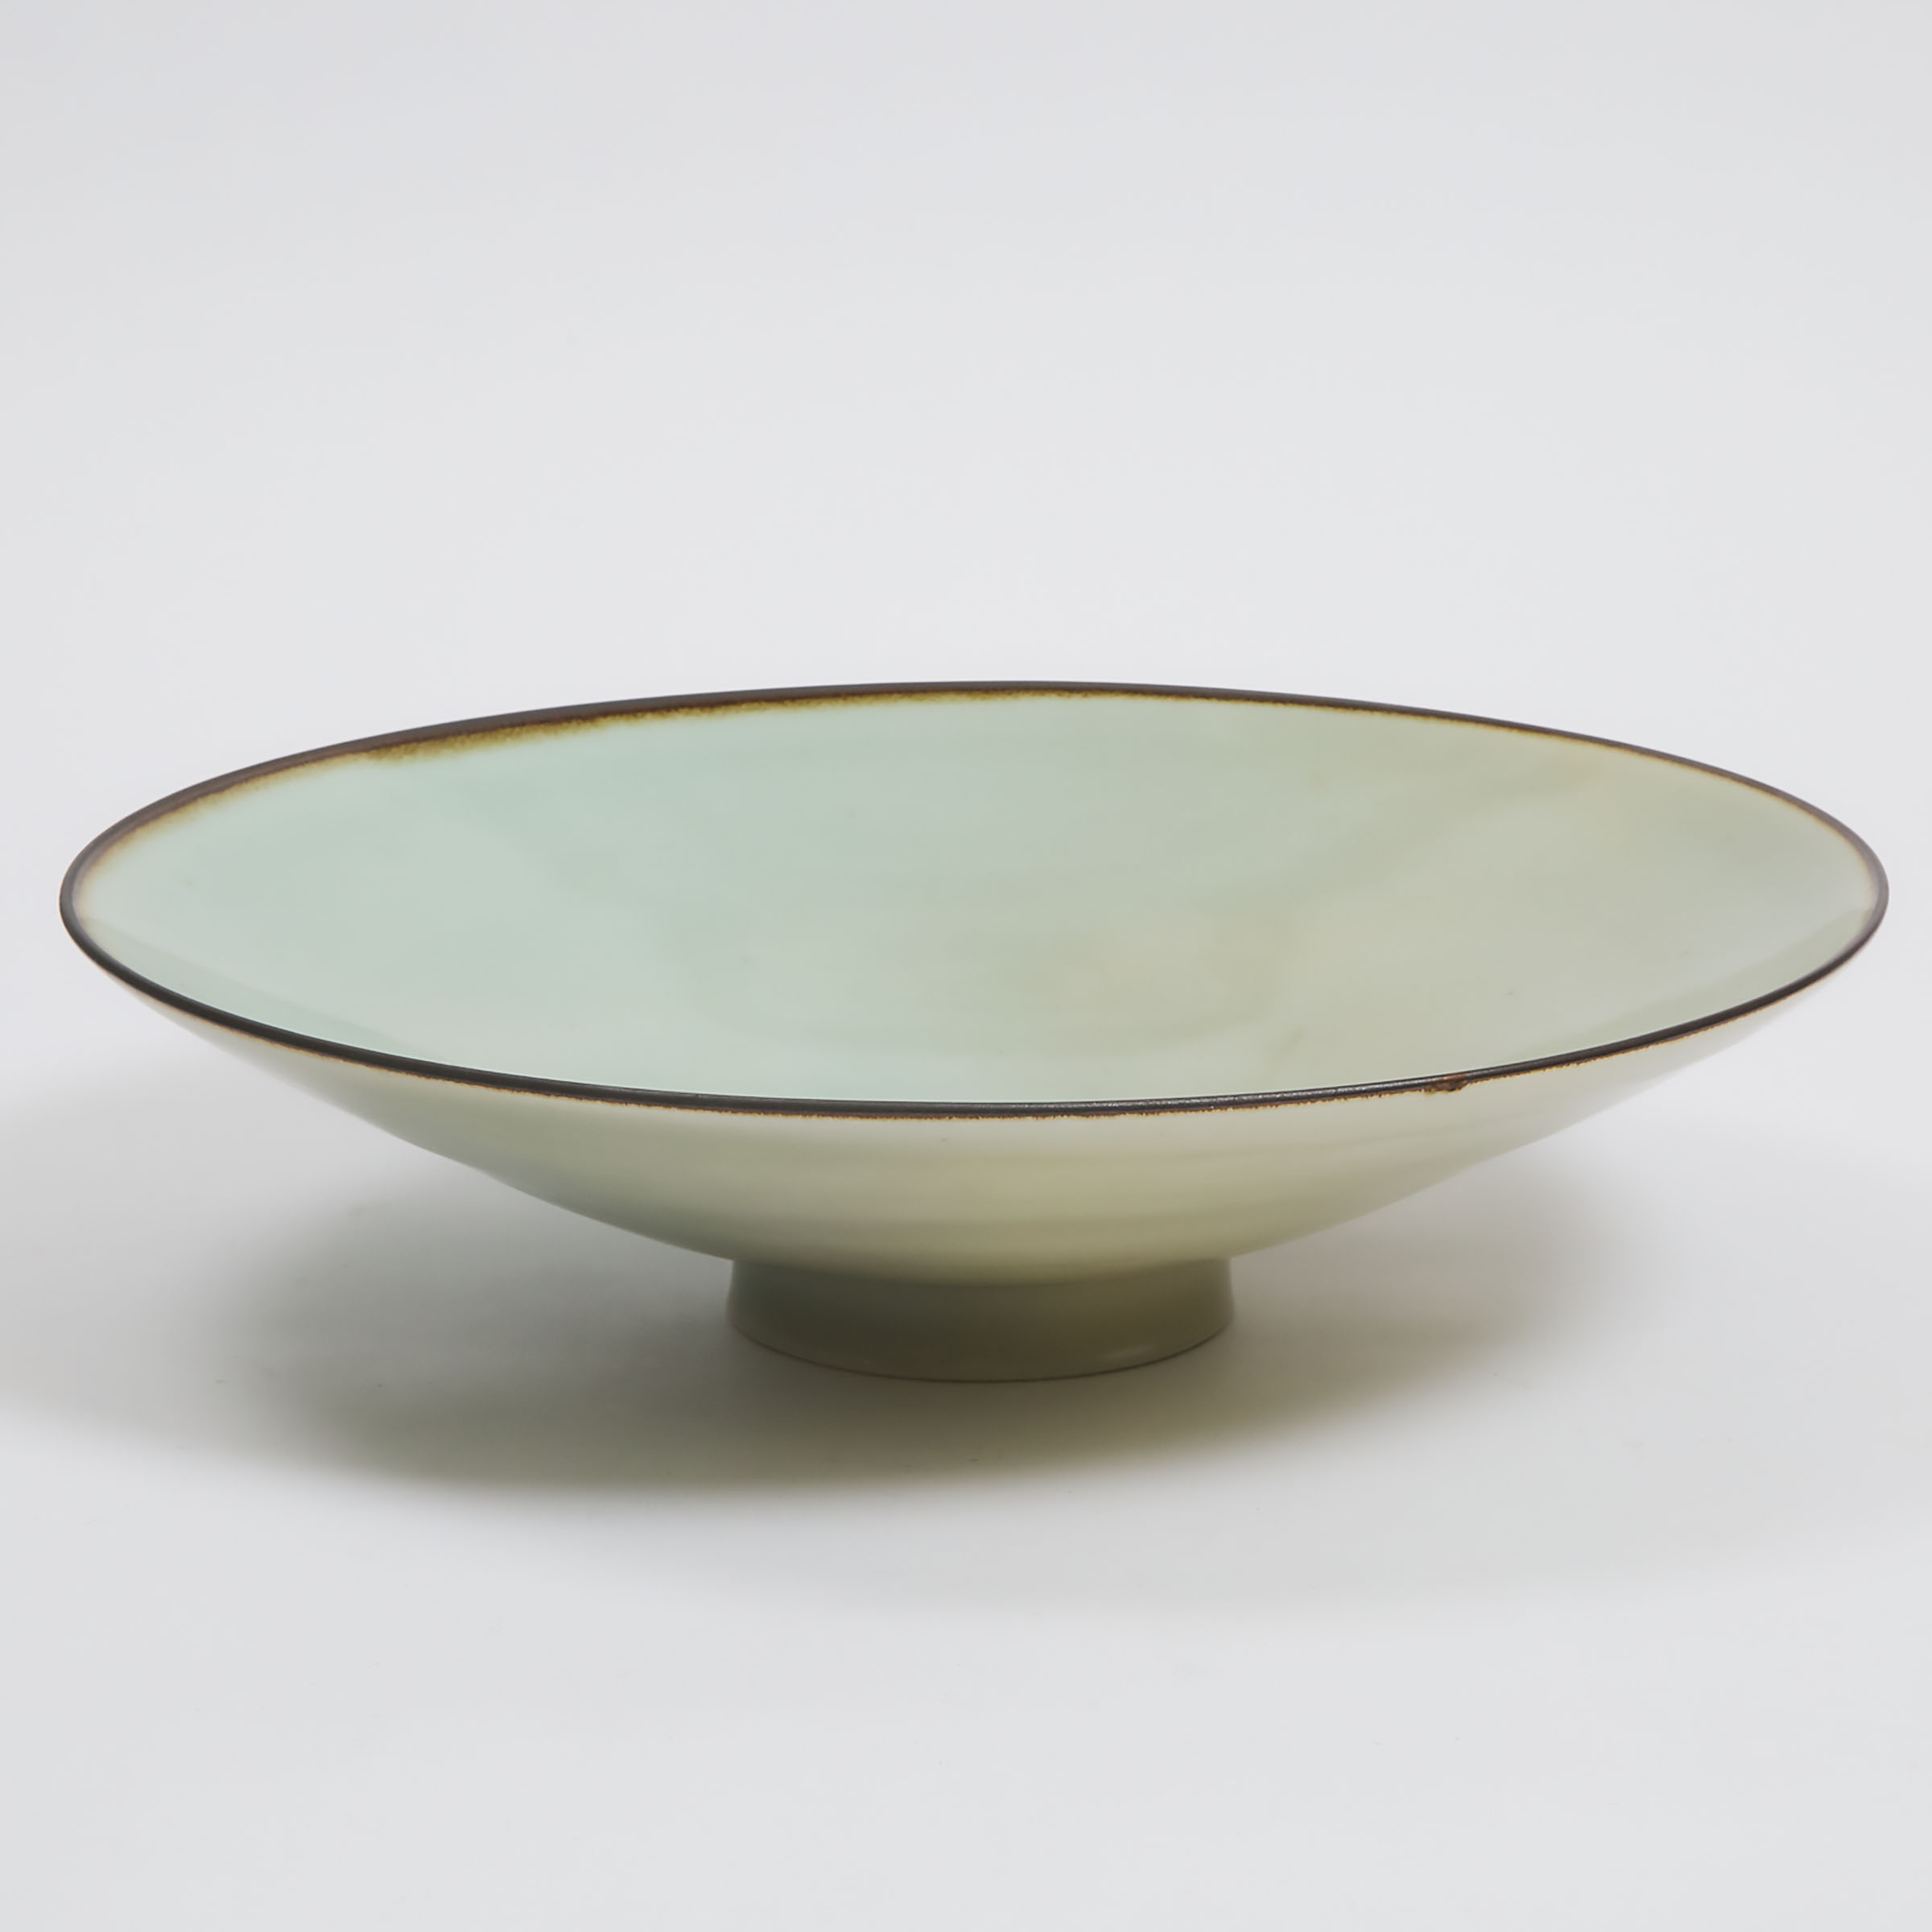 Bill Reddick (Canadian, b.1958), Celadon Glazed Shallow Bowl, 2010